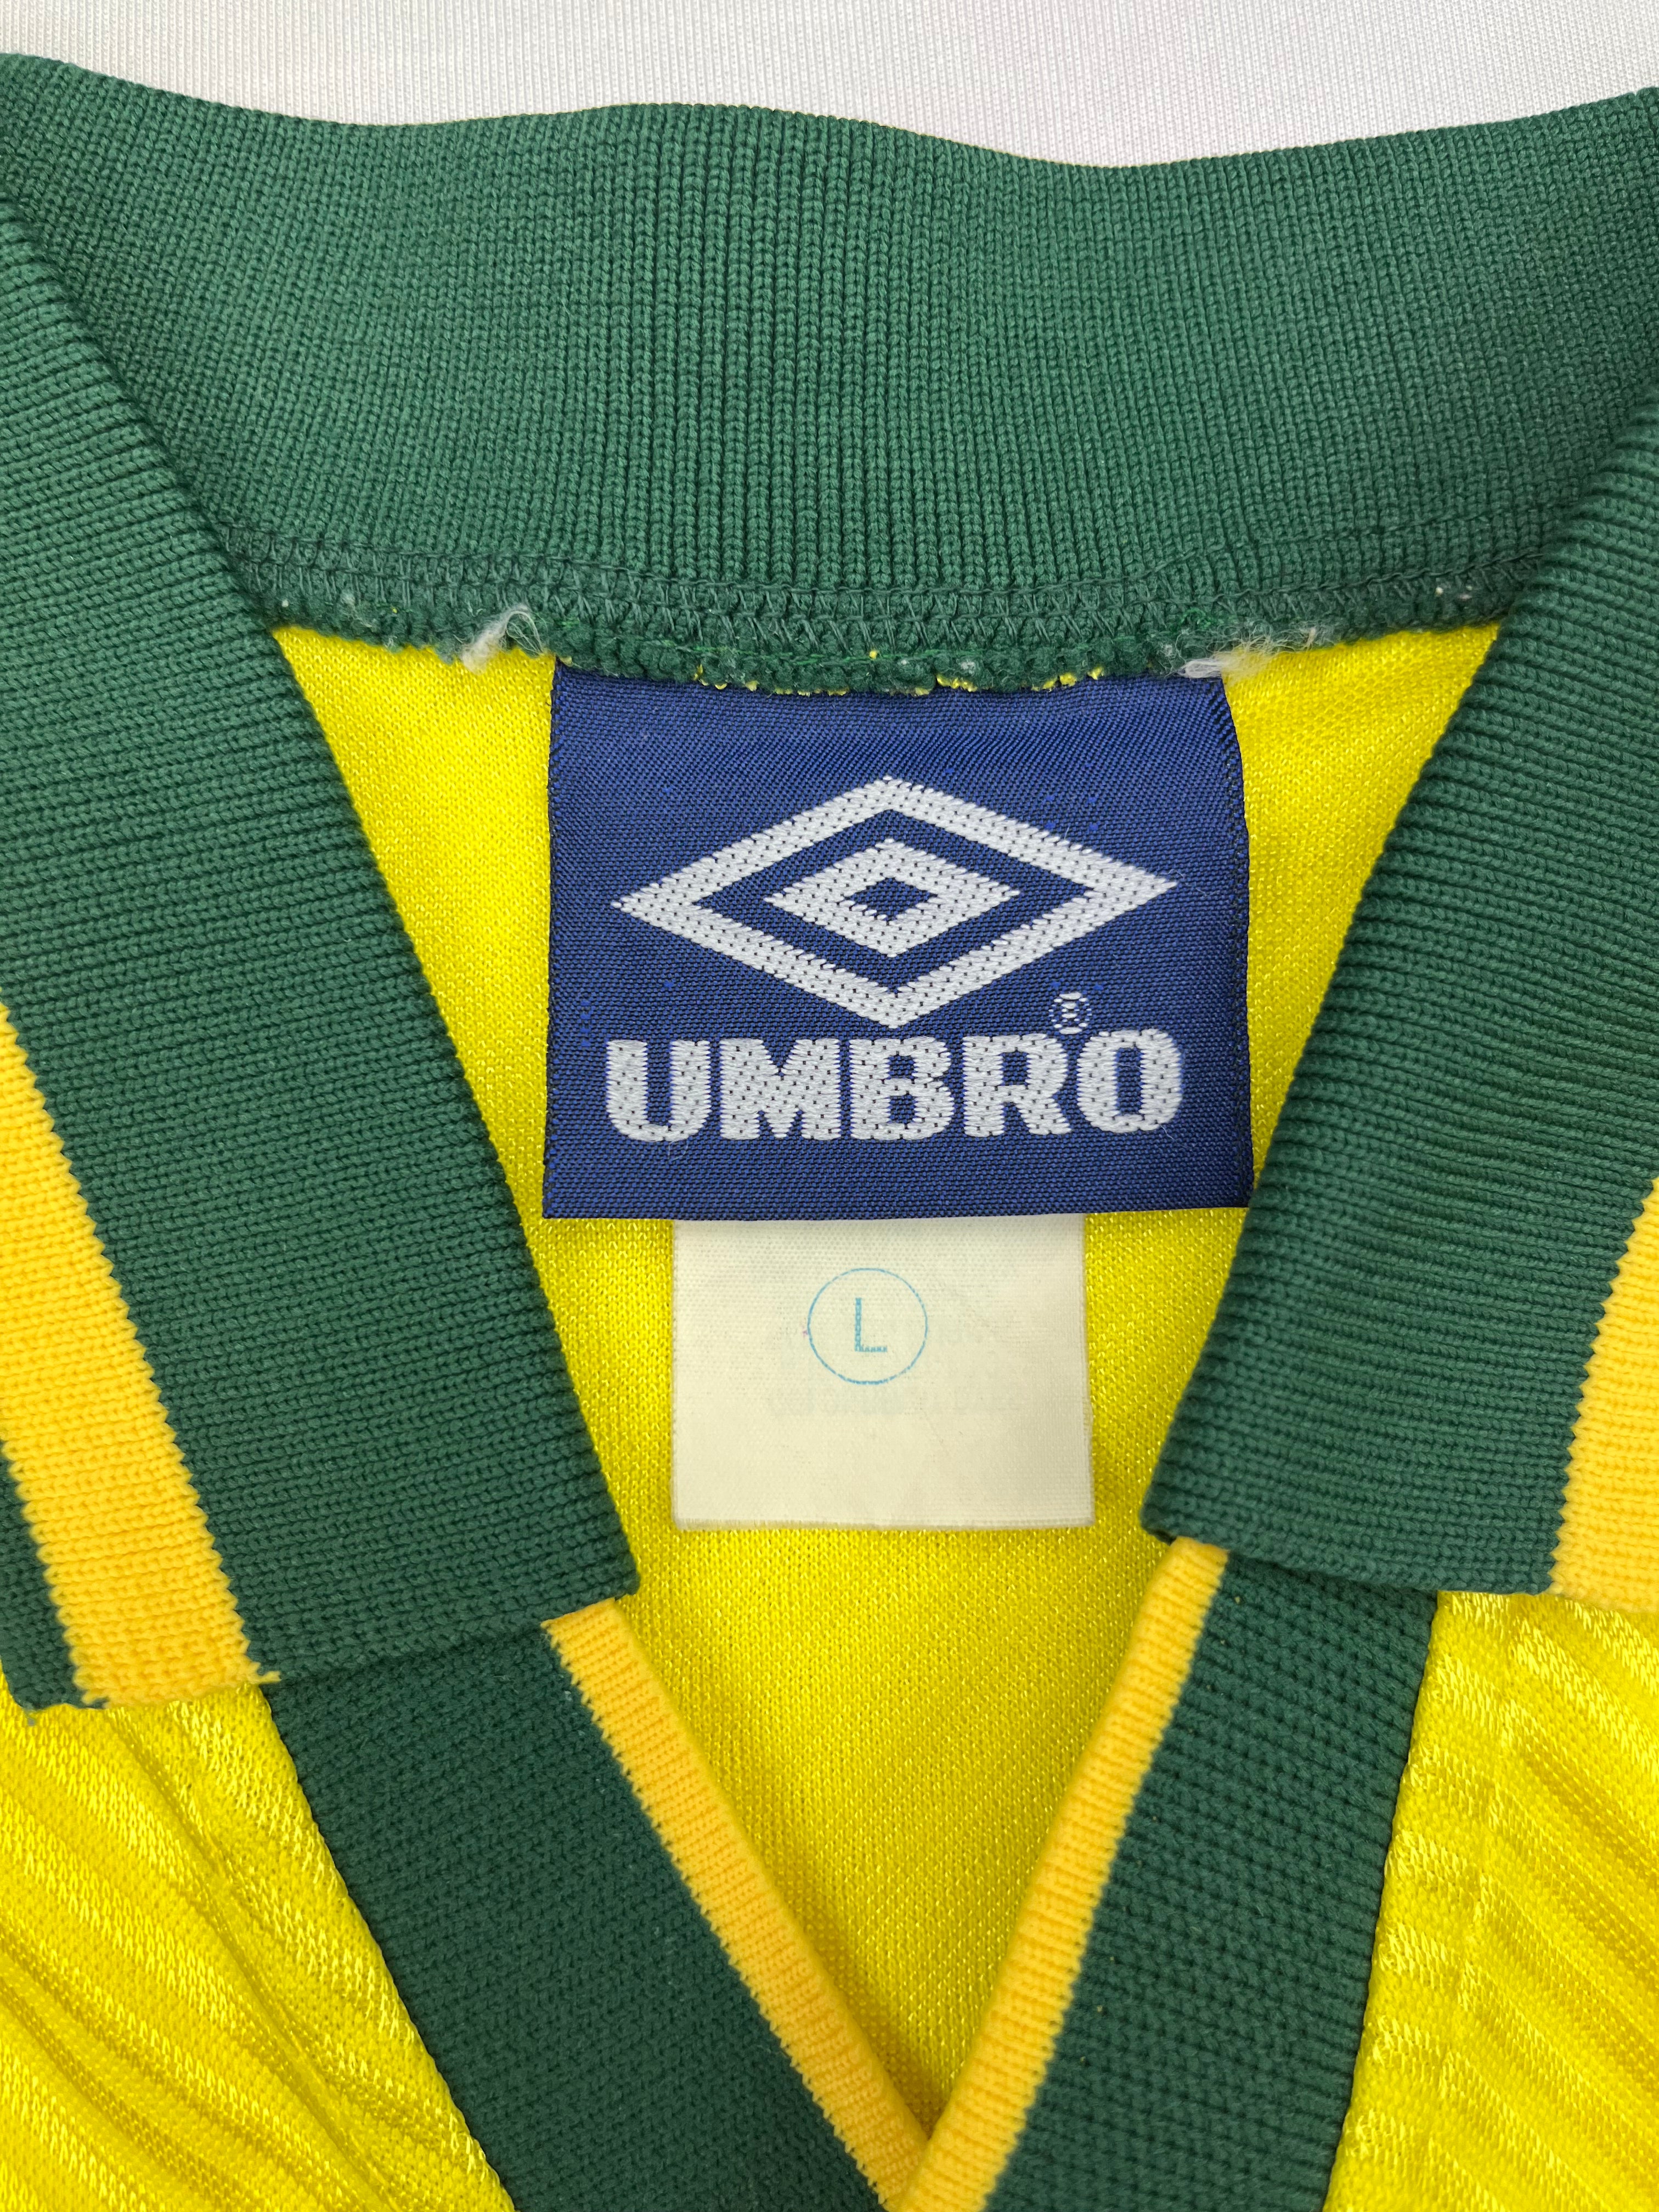 1994/97 Brazil Home Shirt (L) 9/10